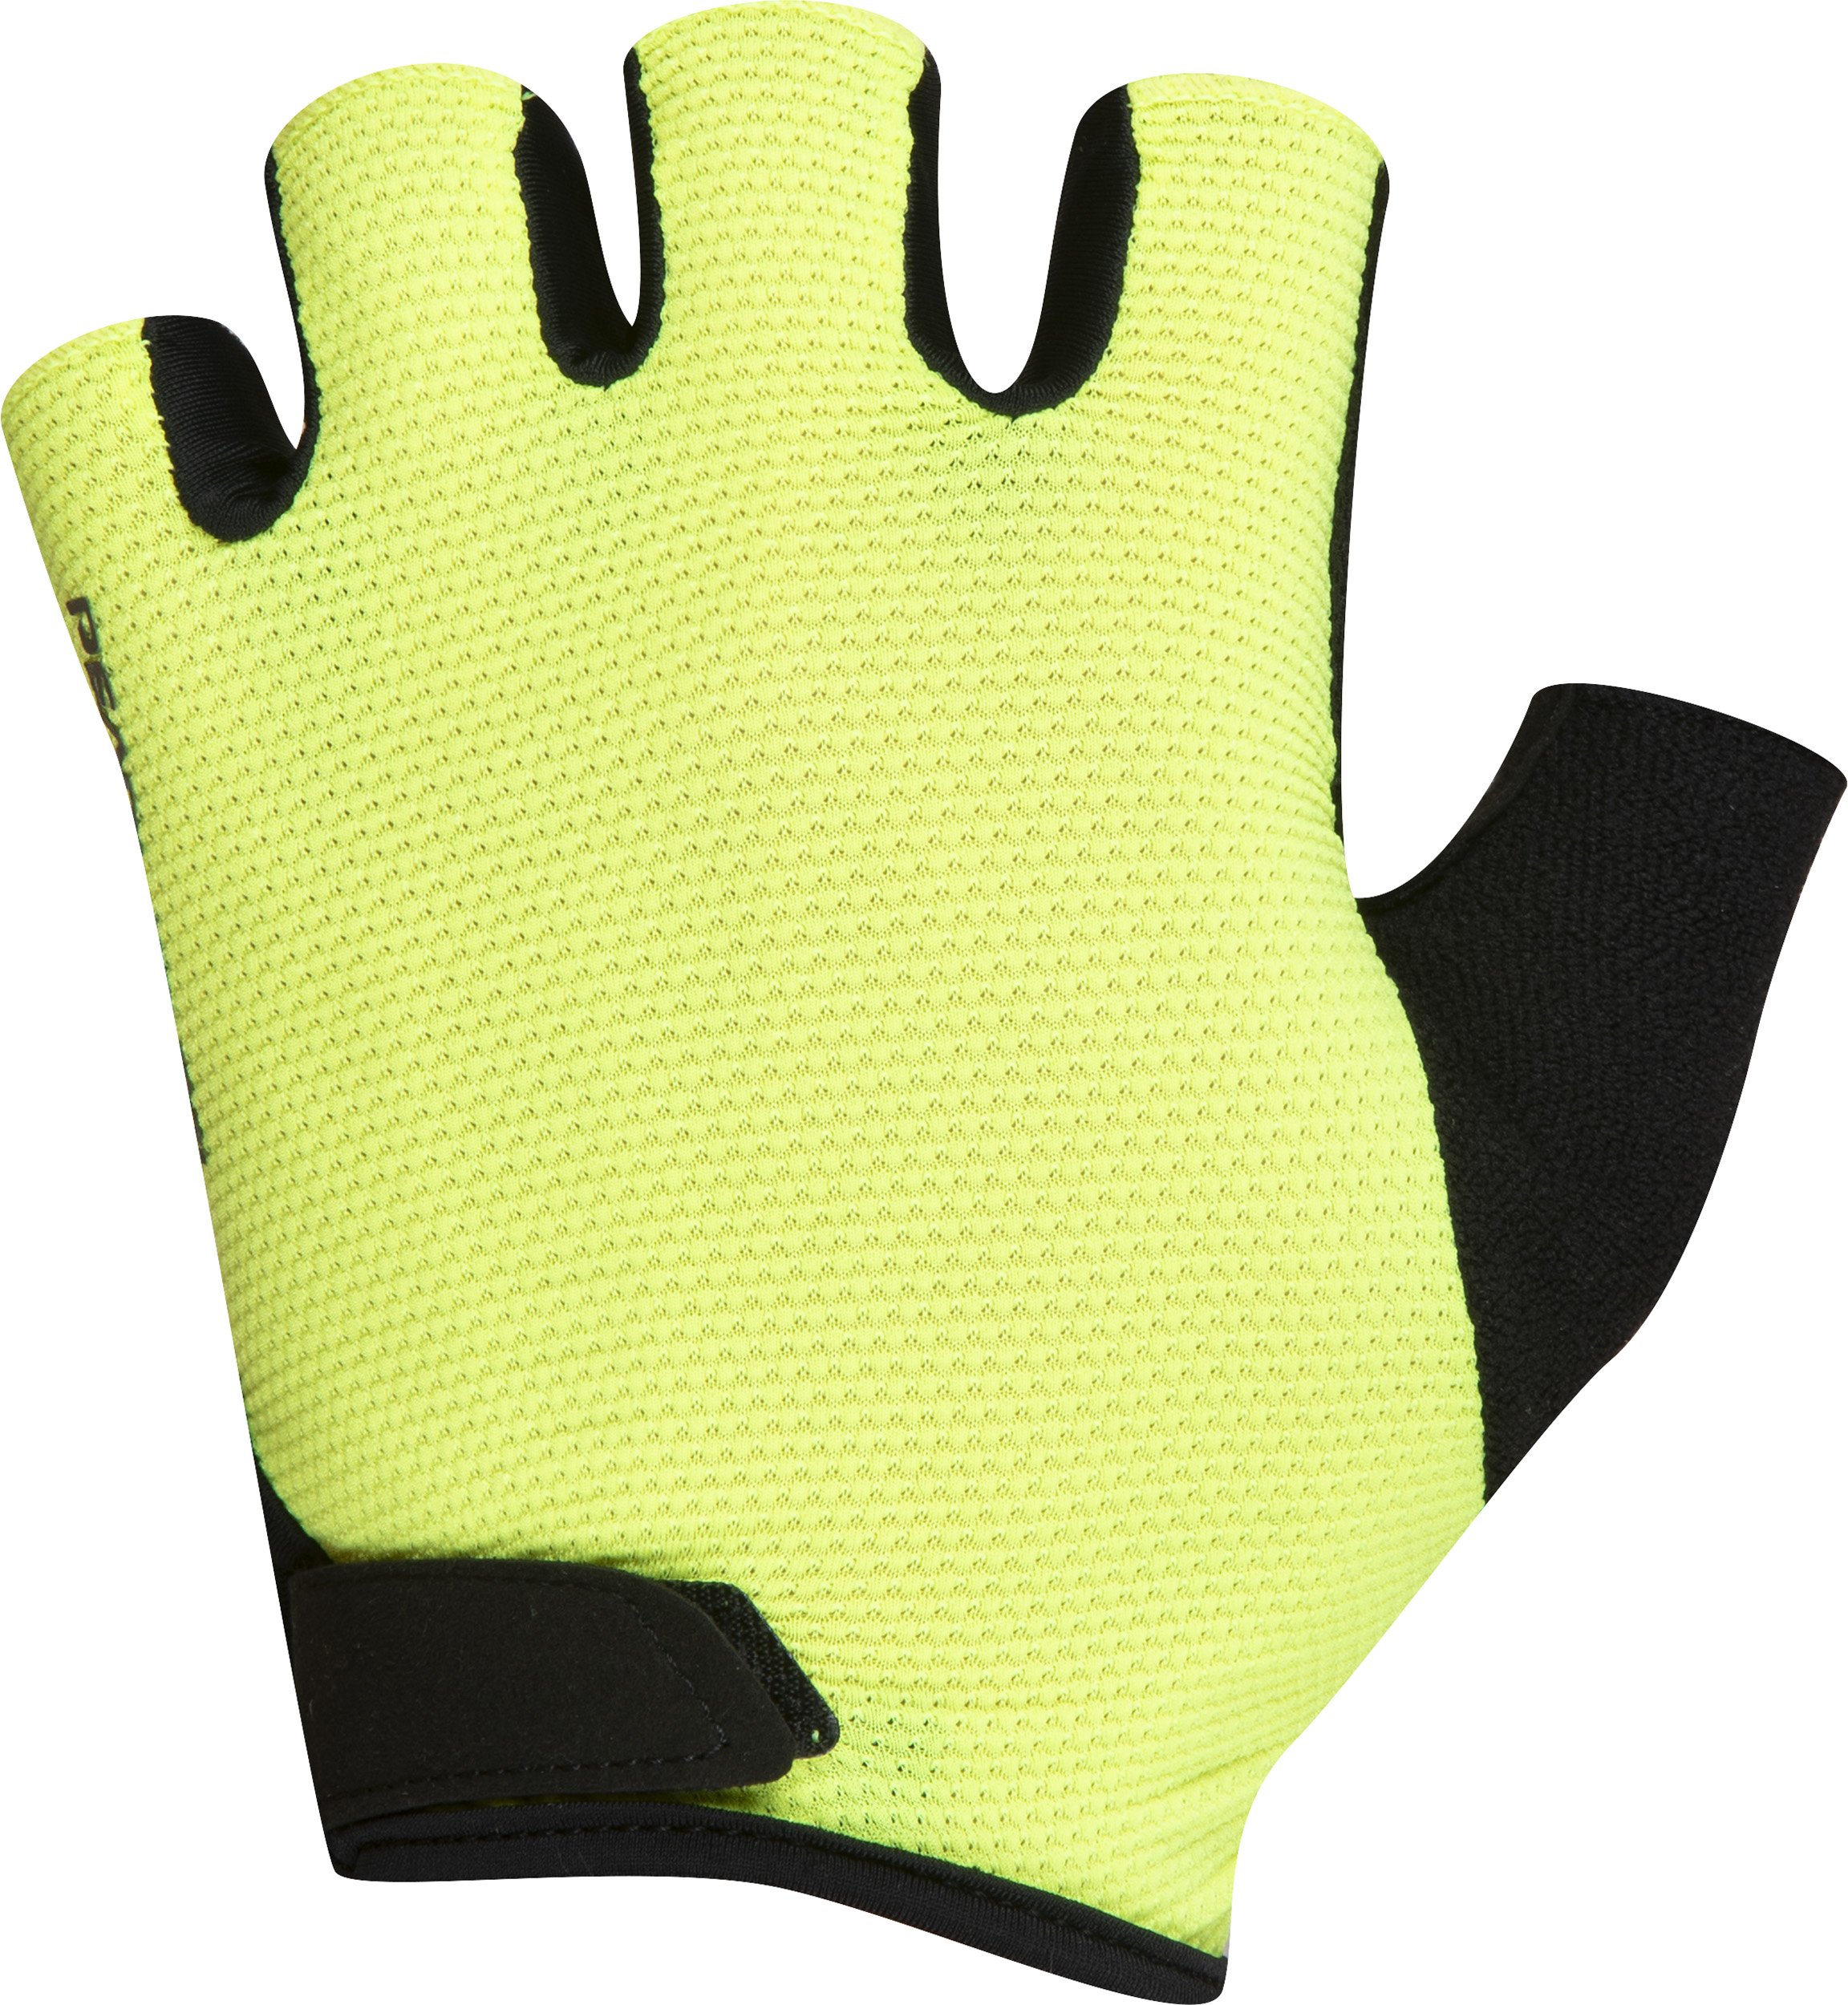 Pearl Izumi AMFIB Lite Gloves - Unisex